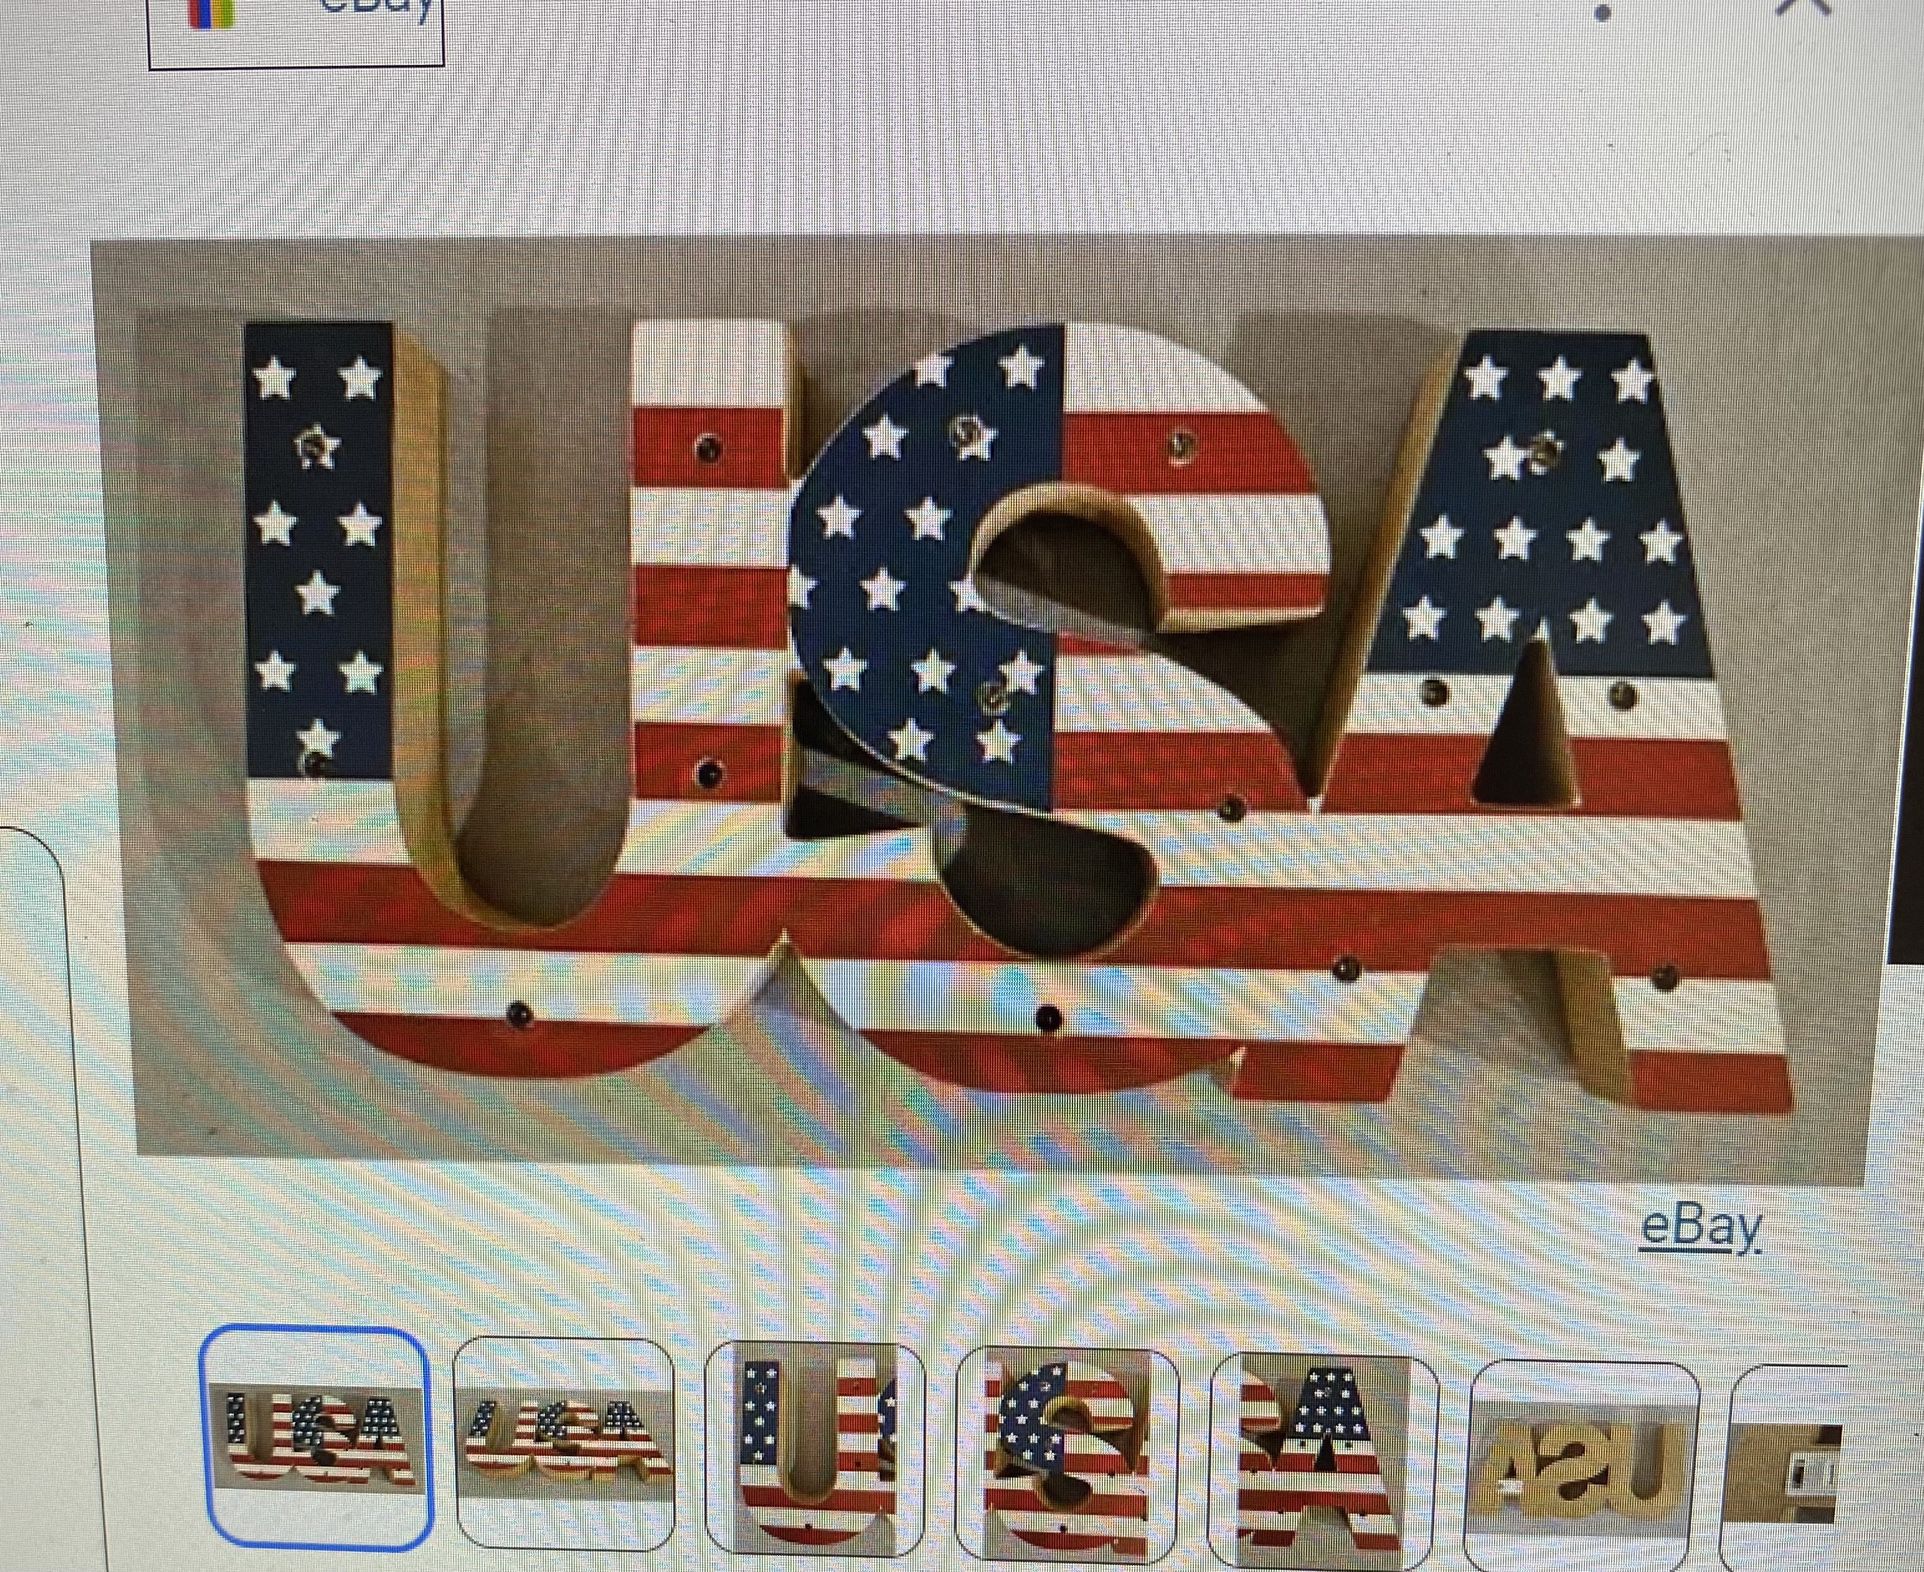 Patriotic USA Letters